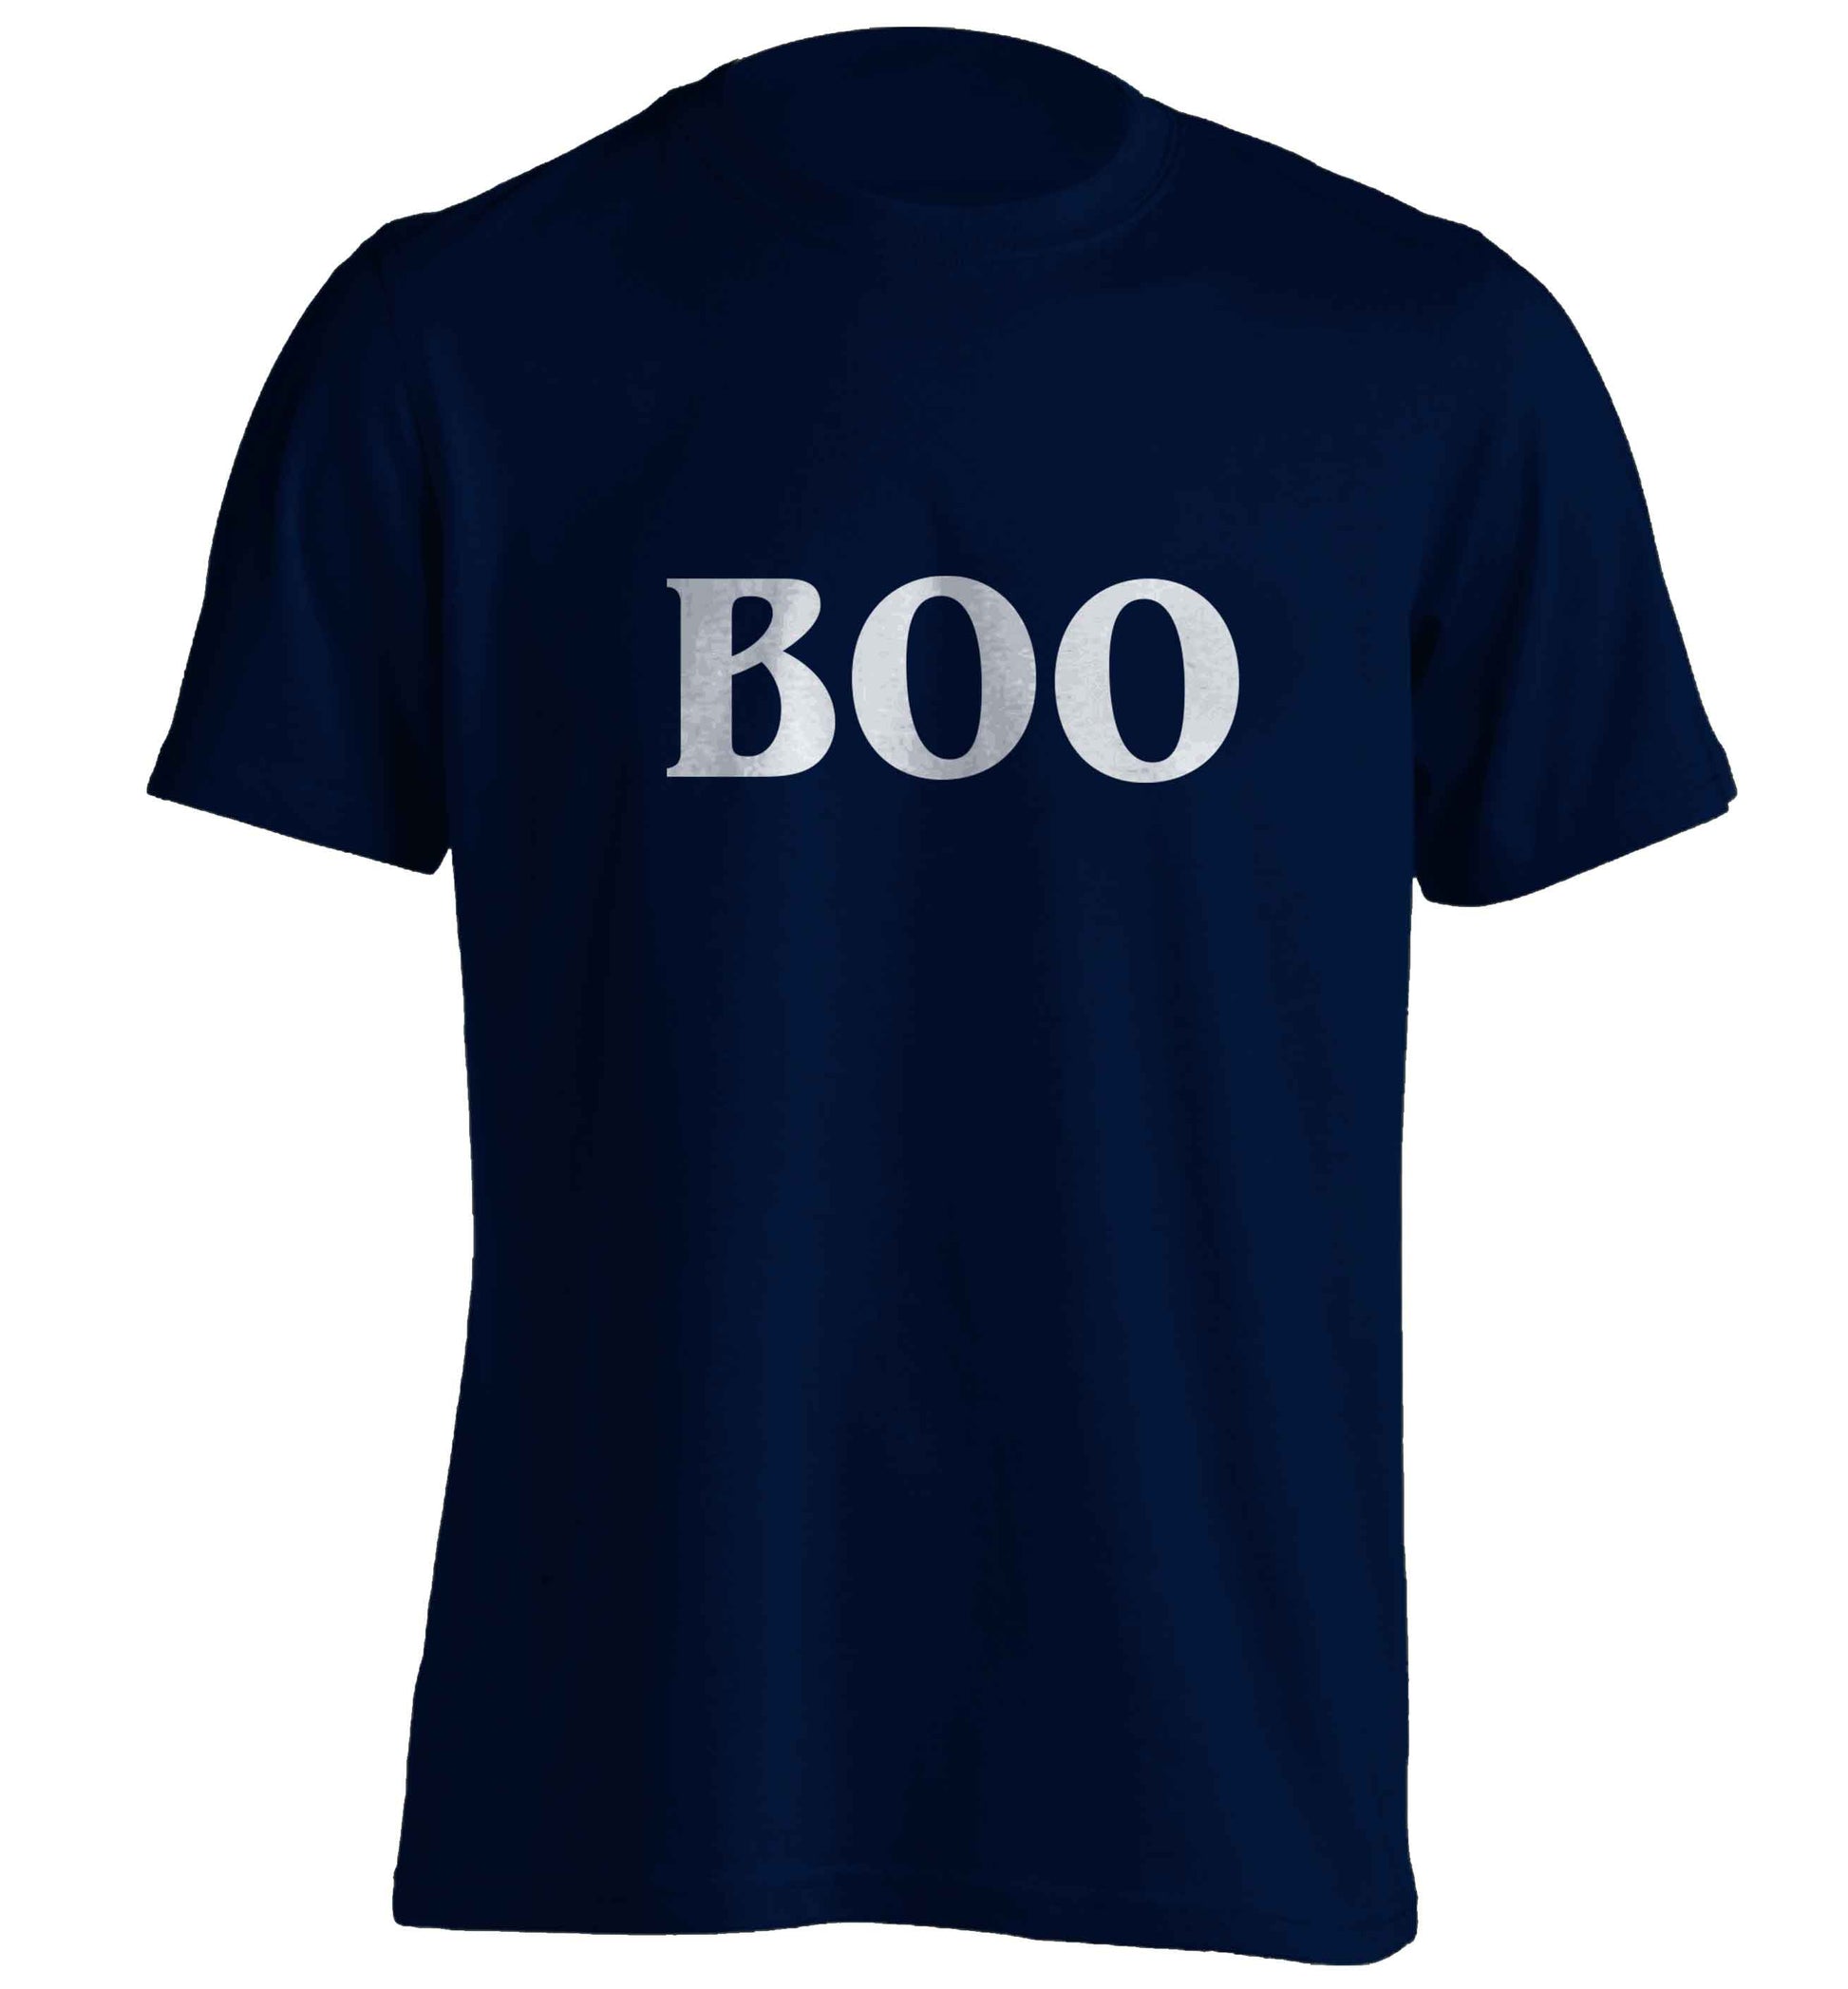 Boo adults unisex navy Tshirt 2XL